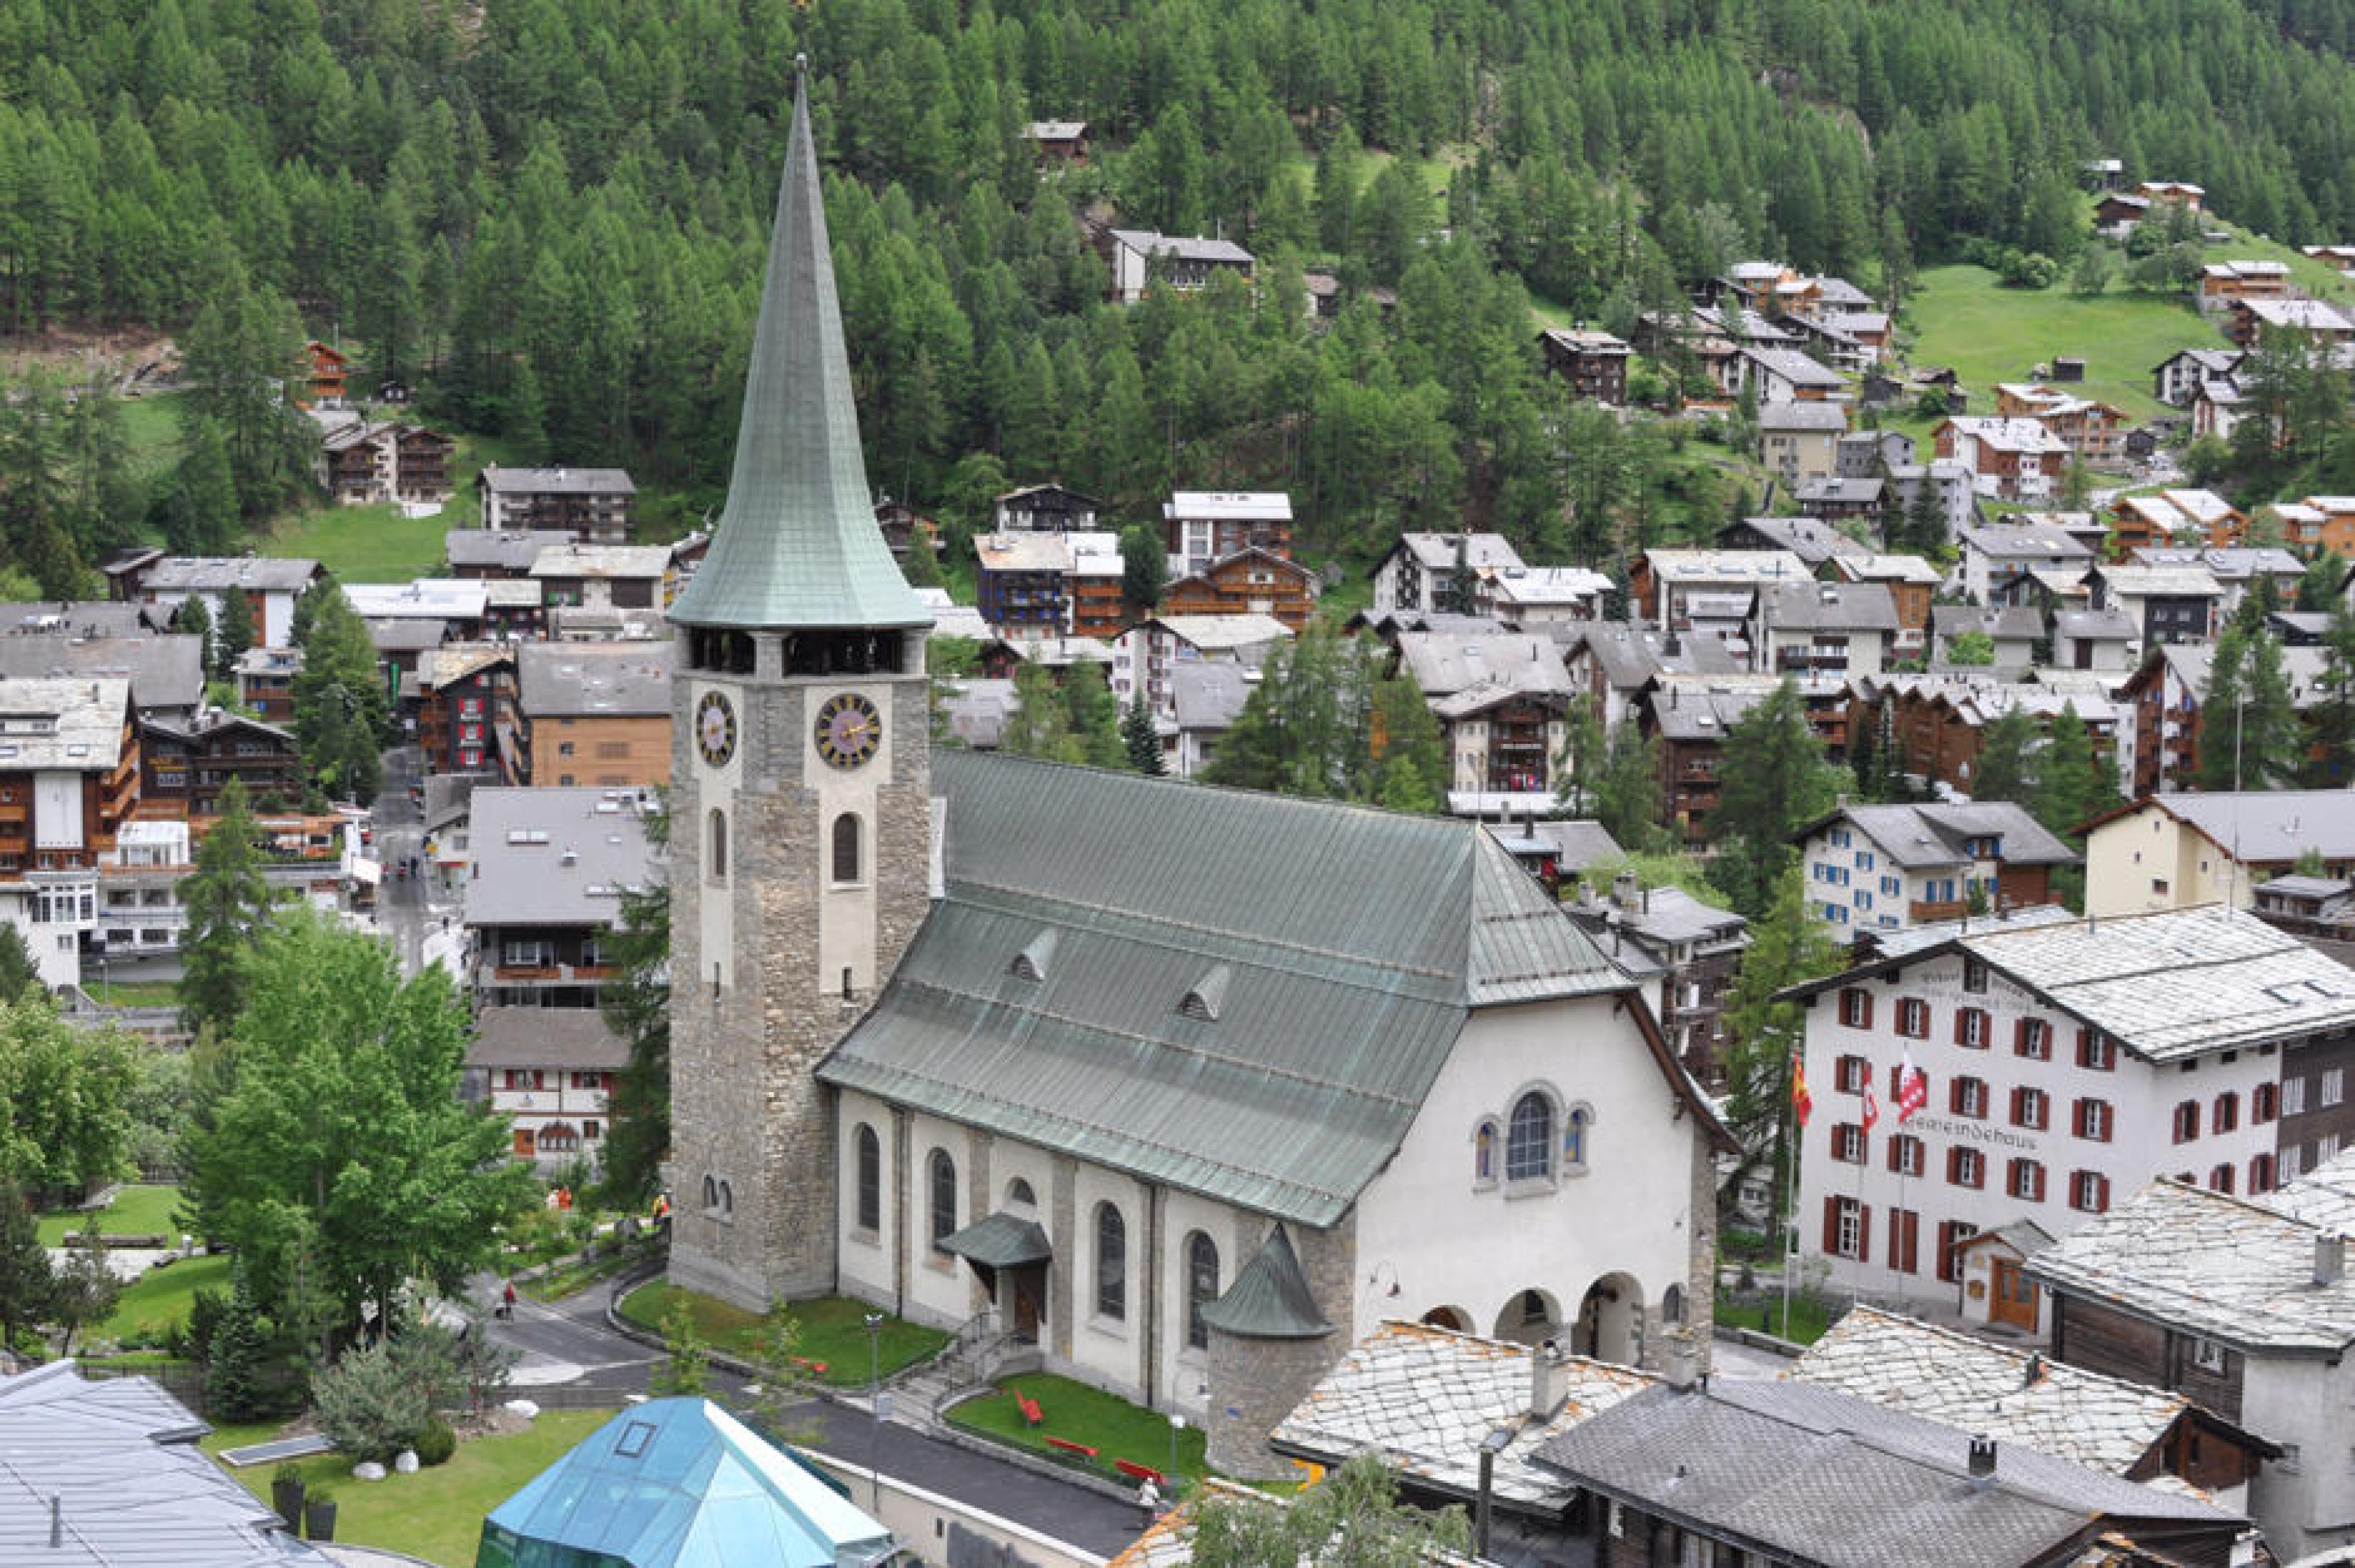 Aerial View - St. Mauritius Pfarrkirche,Zermatt, Switzerland